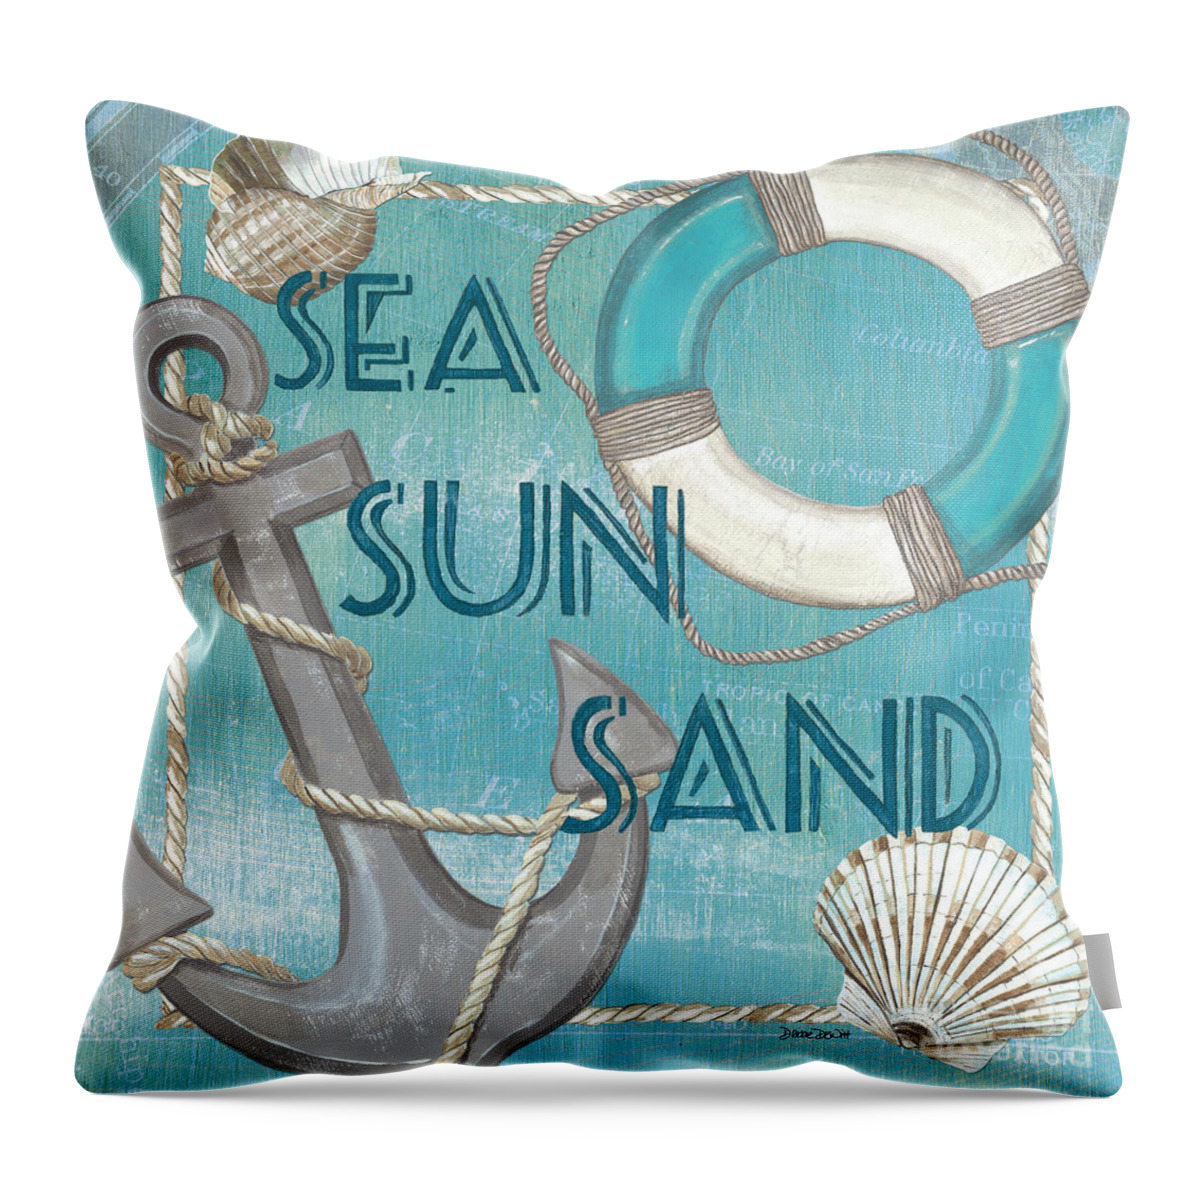 Sun Throw Pillow featuring the painting Sea Sun Sand by Debbie DeWitt